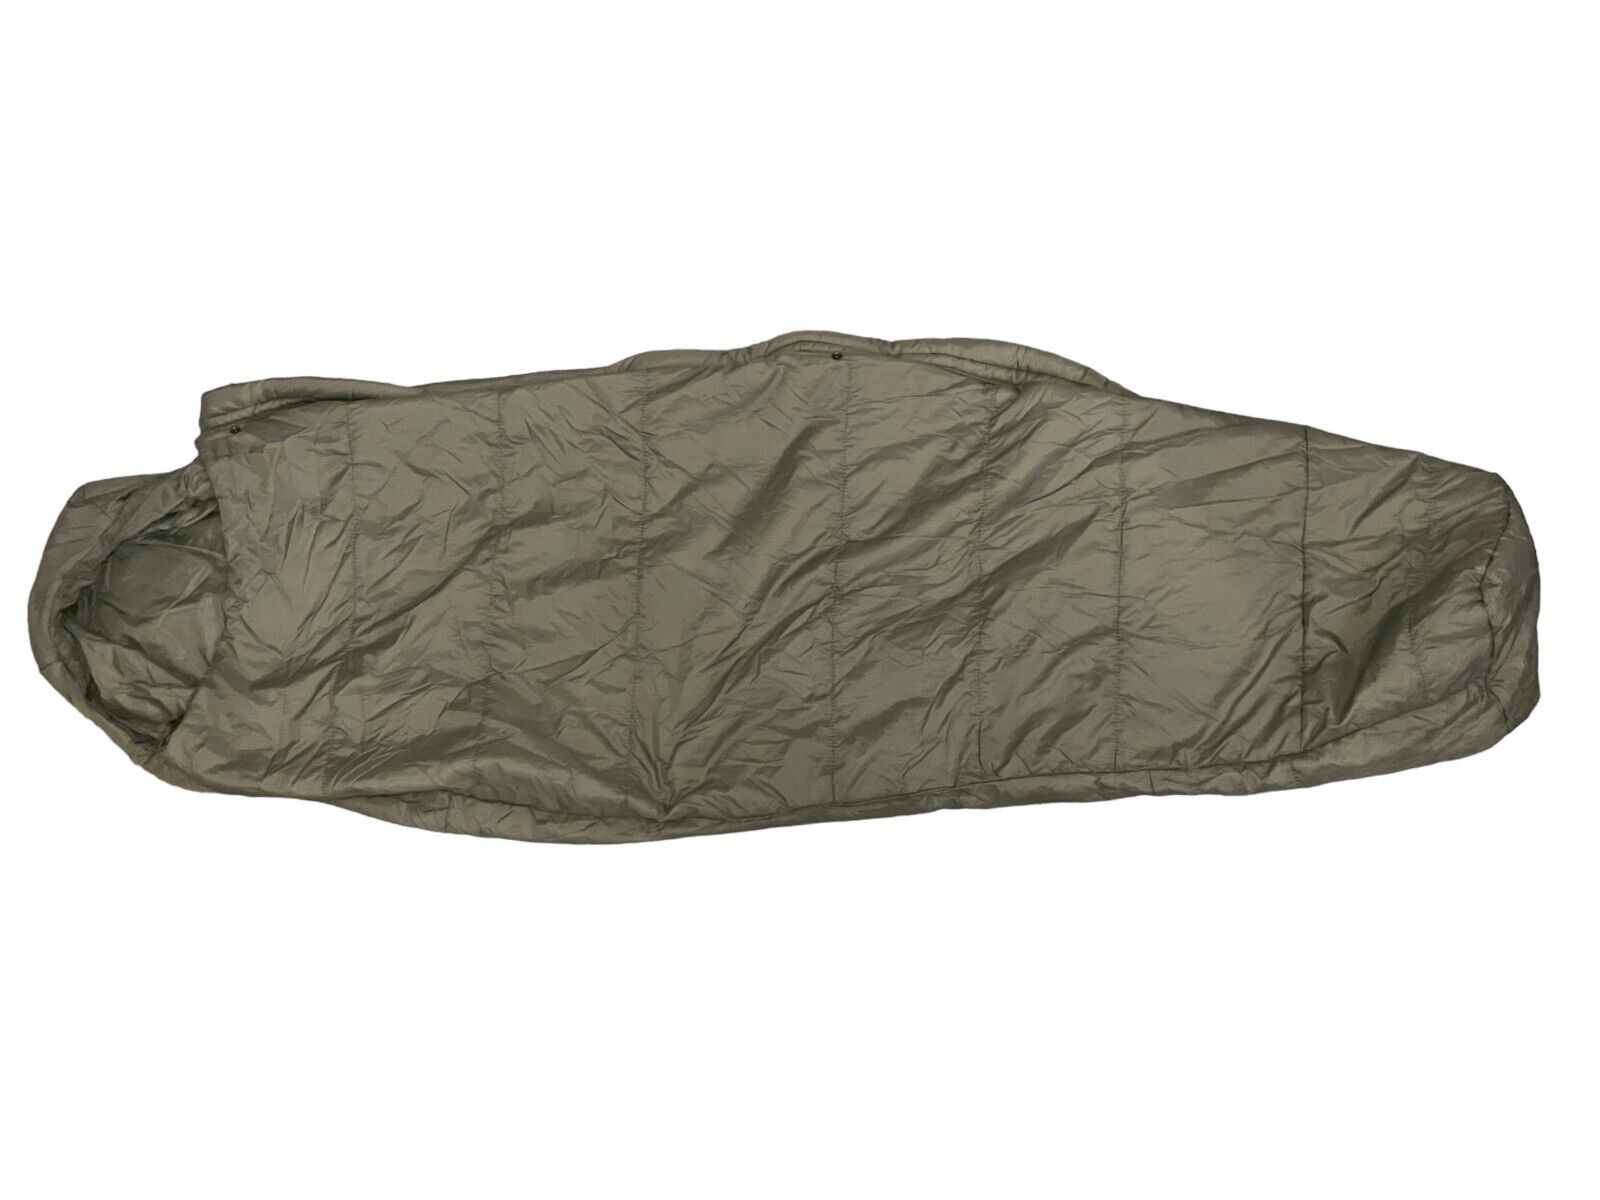 USGI Patrol Sleeping Bag Foliage Green / Gray Modular Sleep System VGC